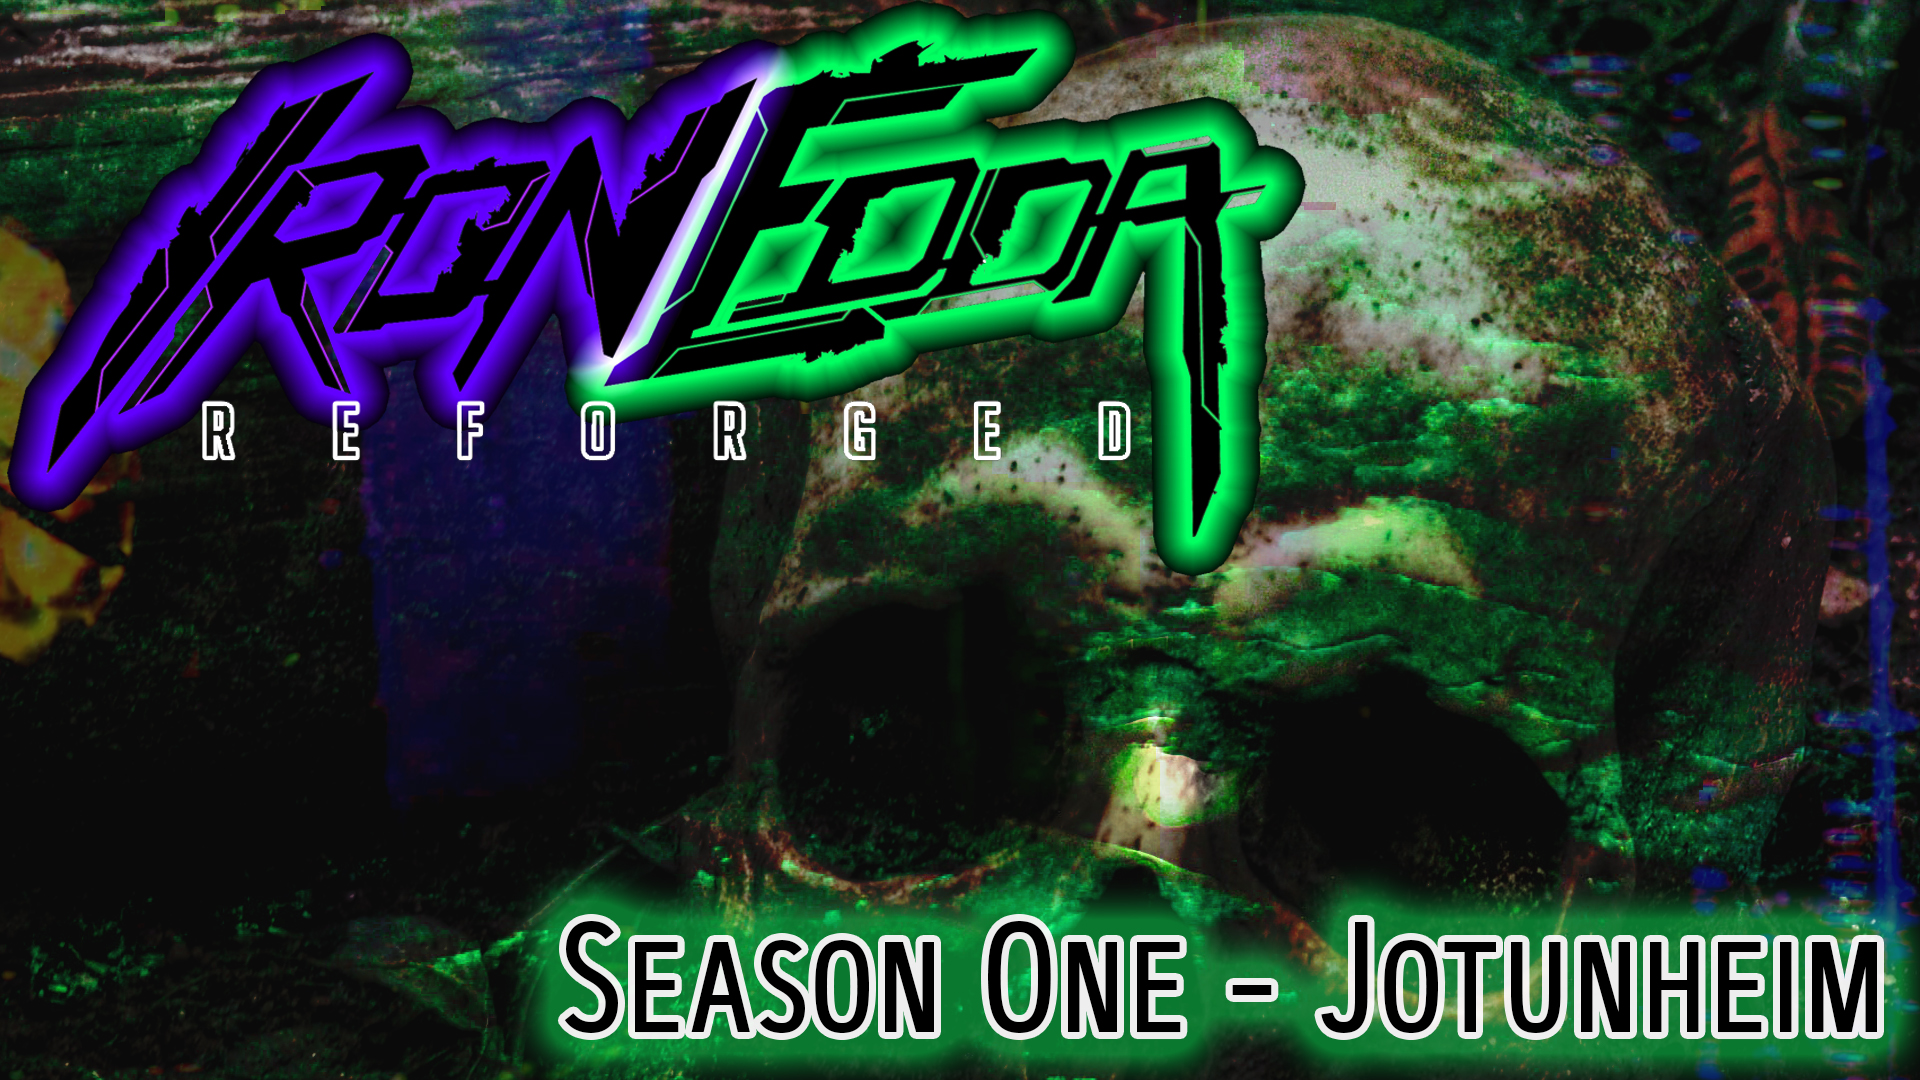 Iron Edda Reforged: Season One - Jotunheim